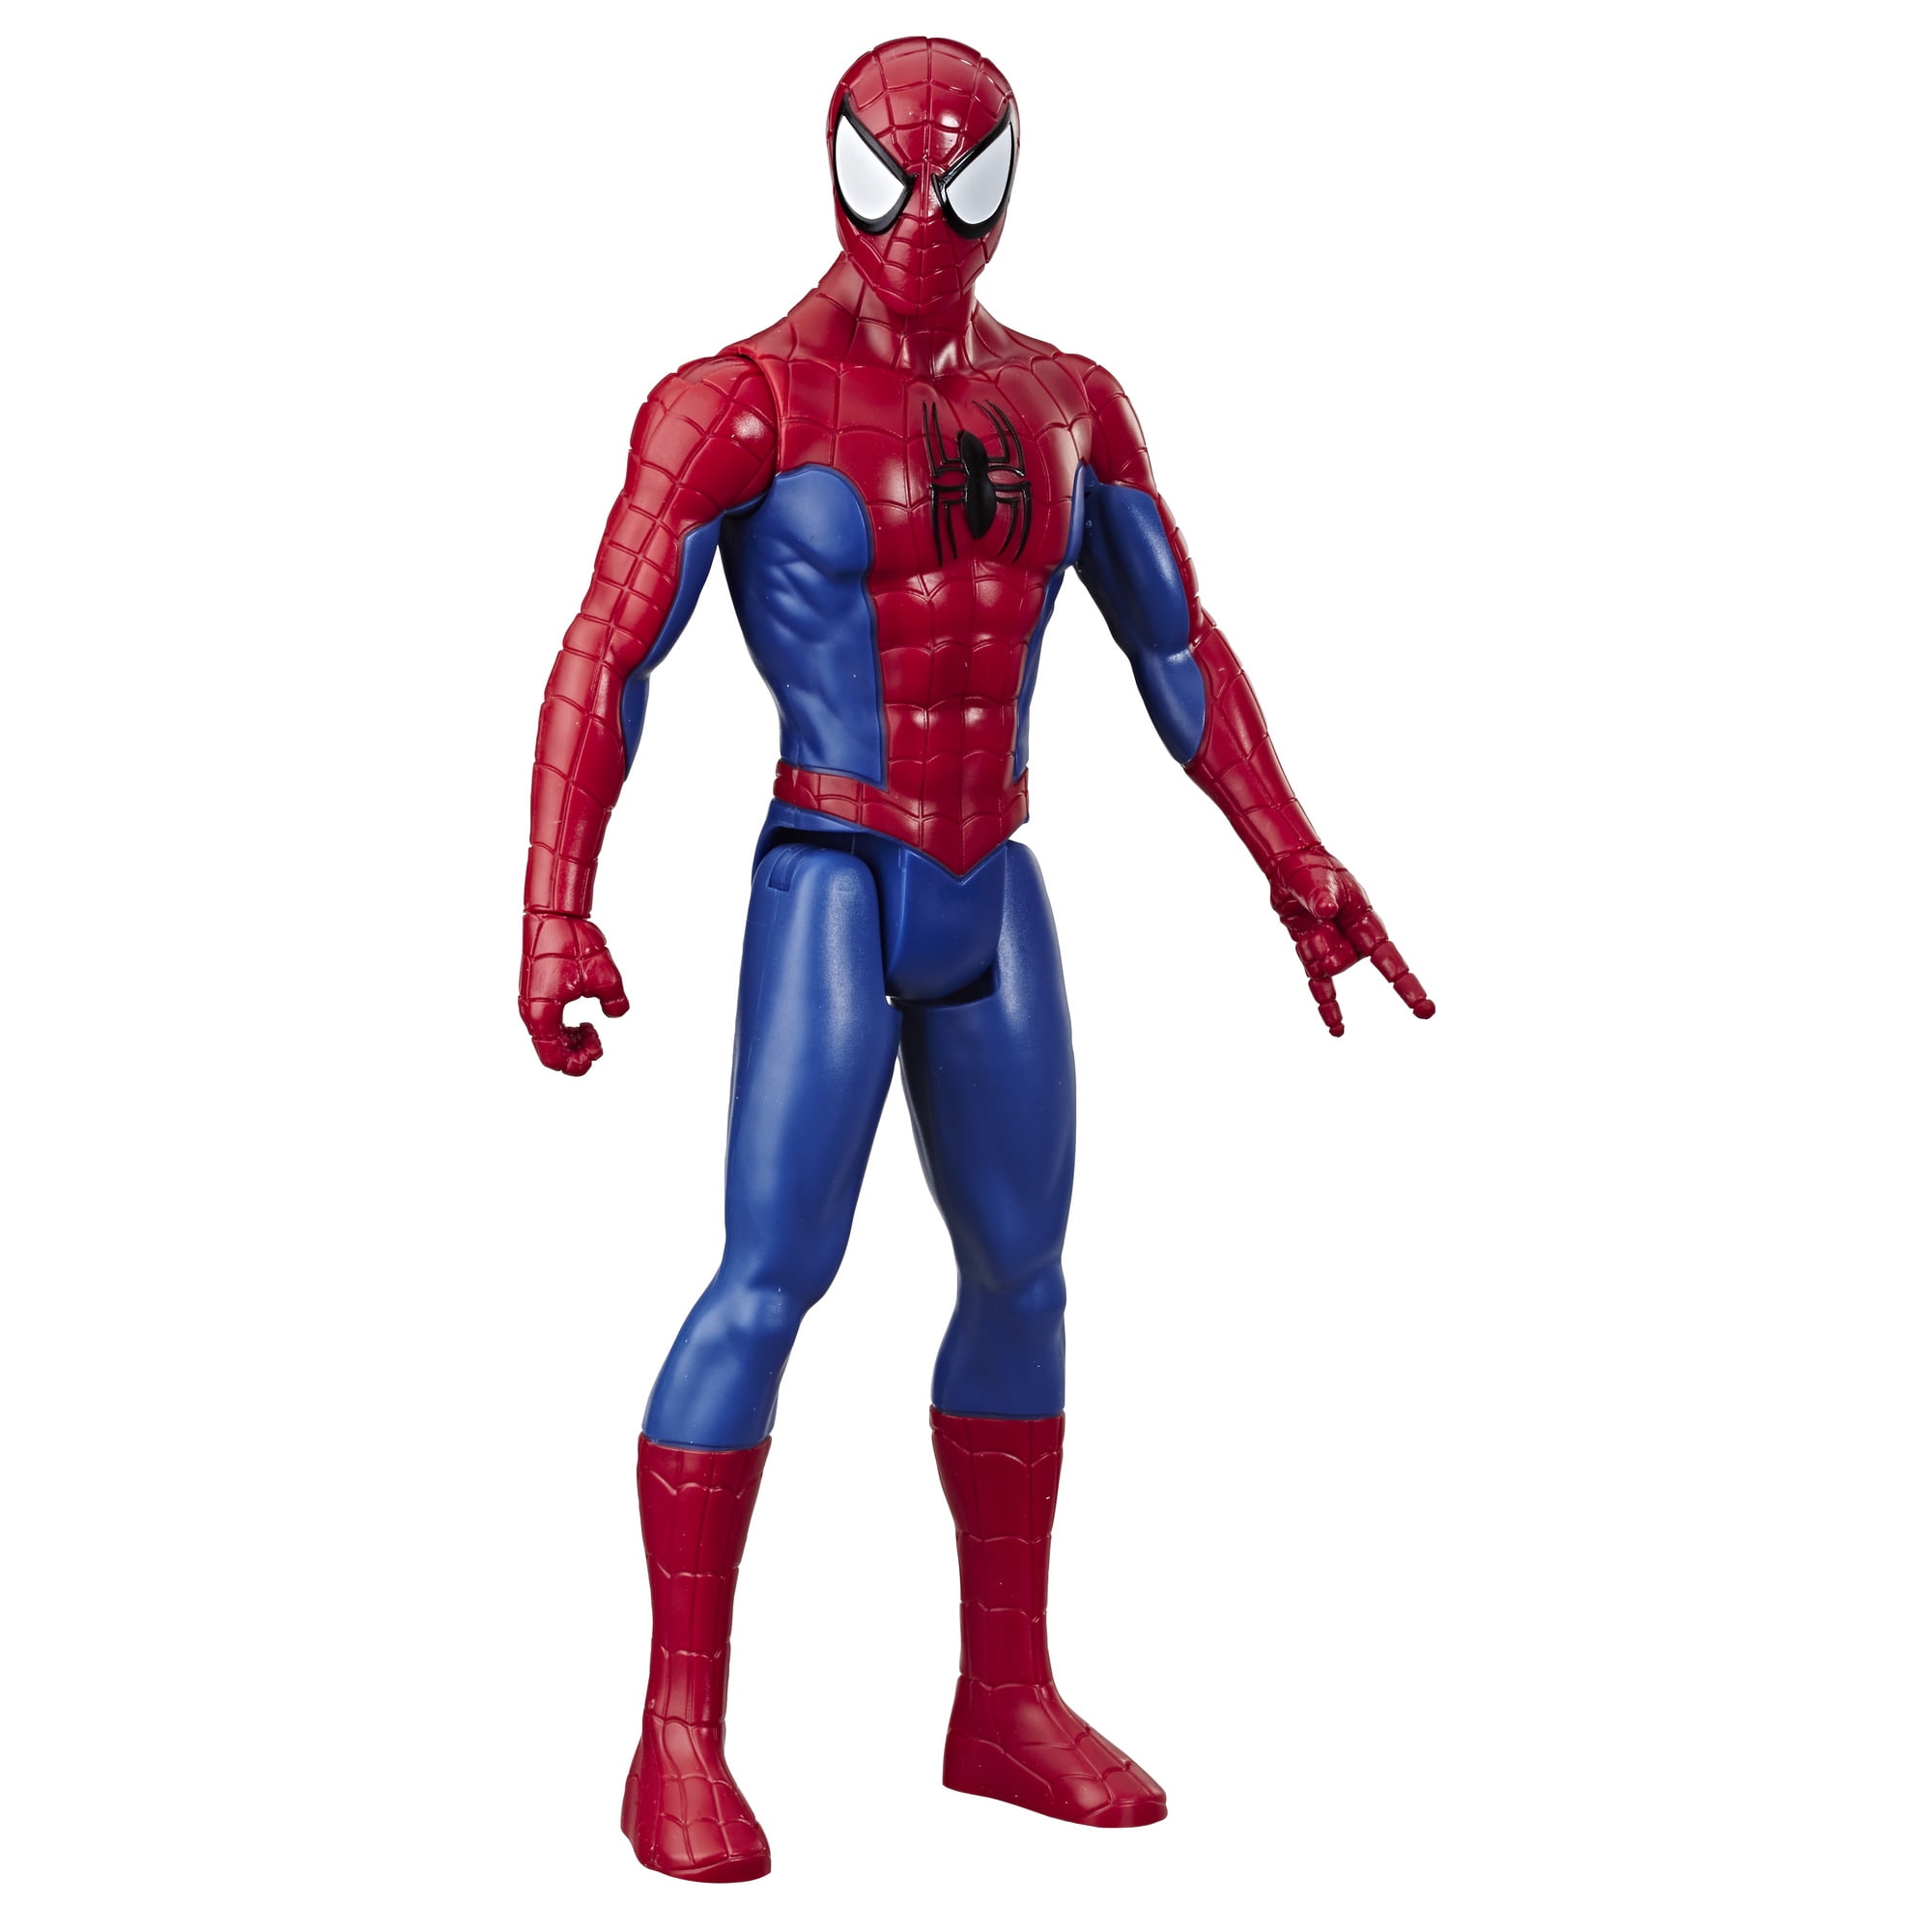 Spider-man Standing MARVEL ULTIMATE SPIDER-MAN Collection of Figures Spiderman 